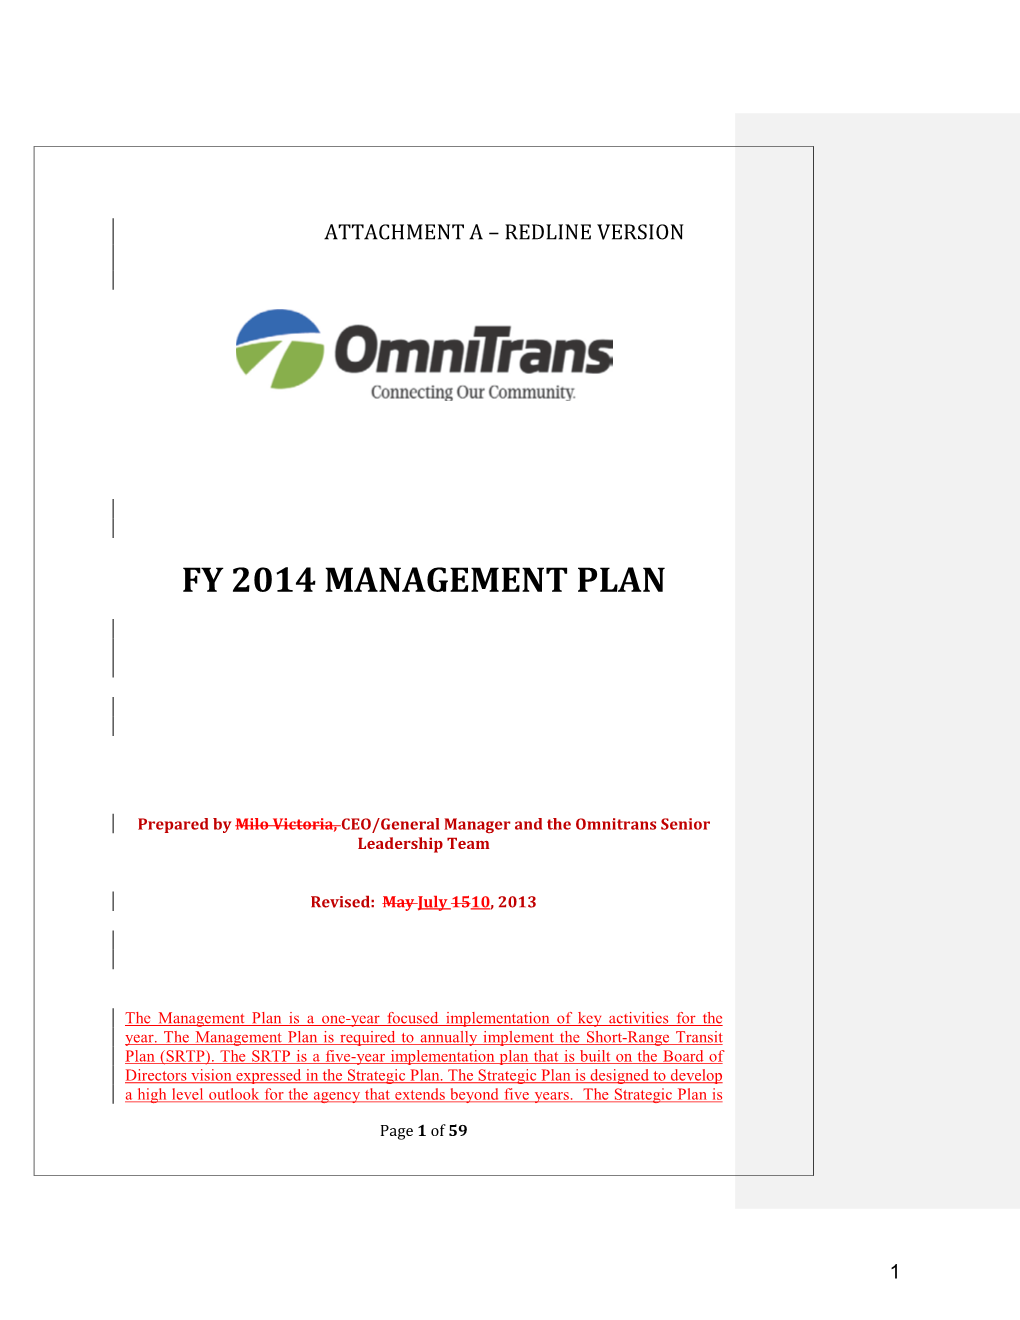 Fy 2014 Management Plan